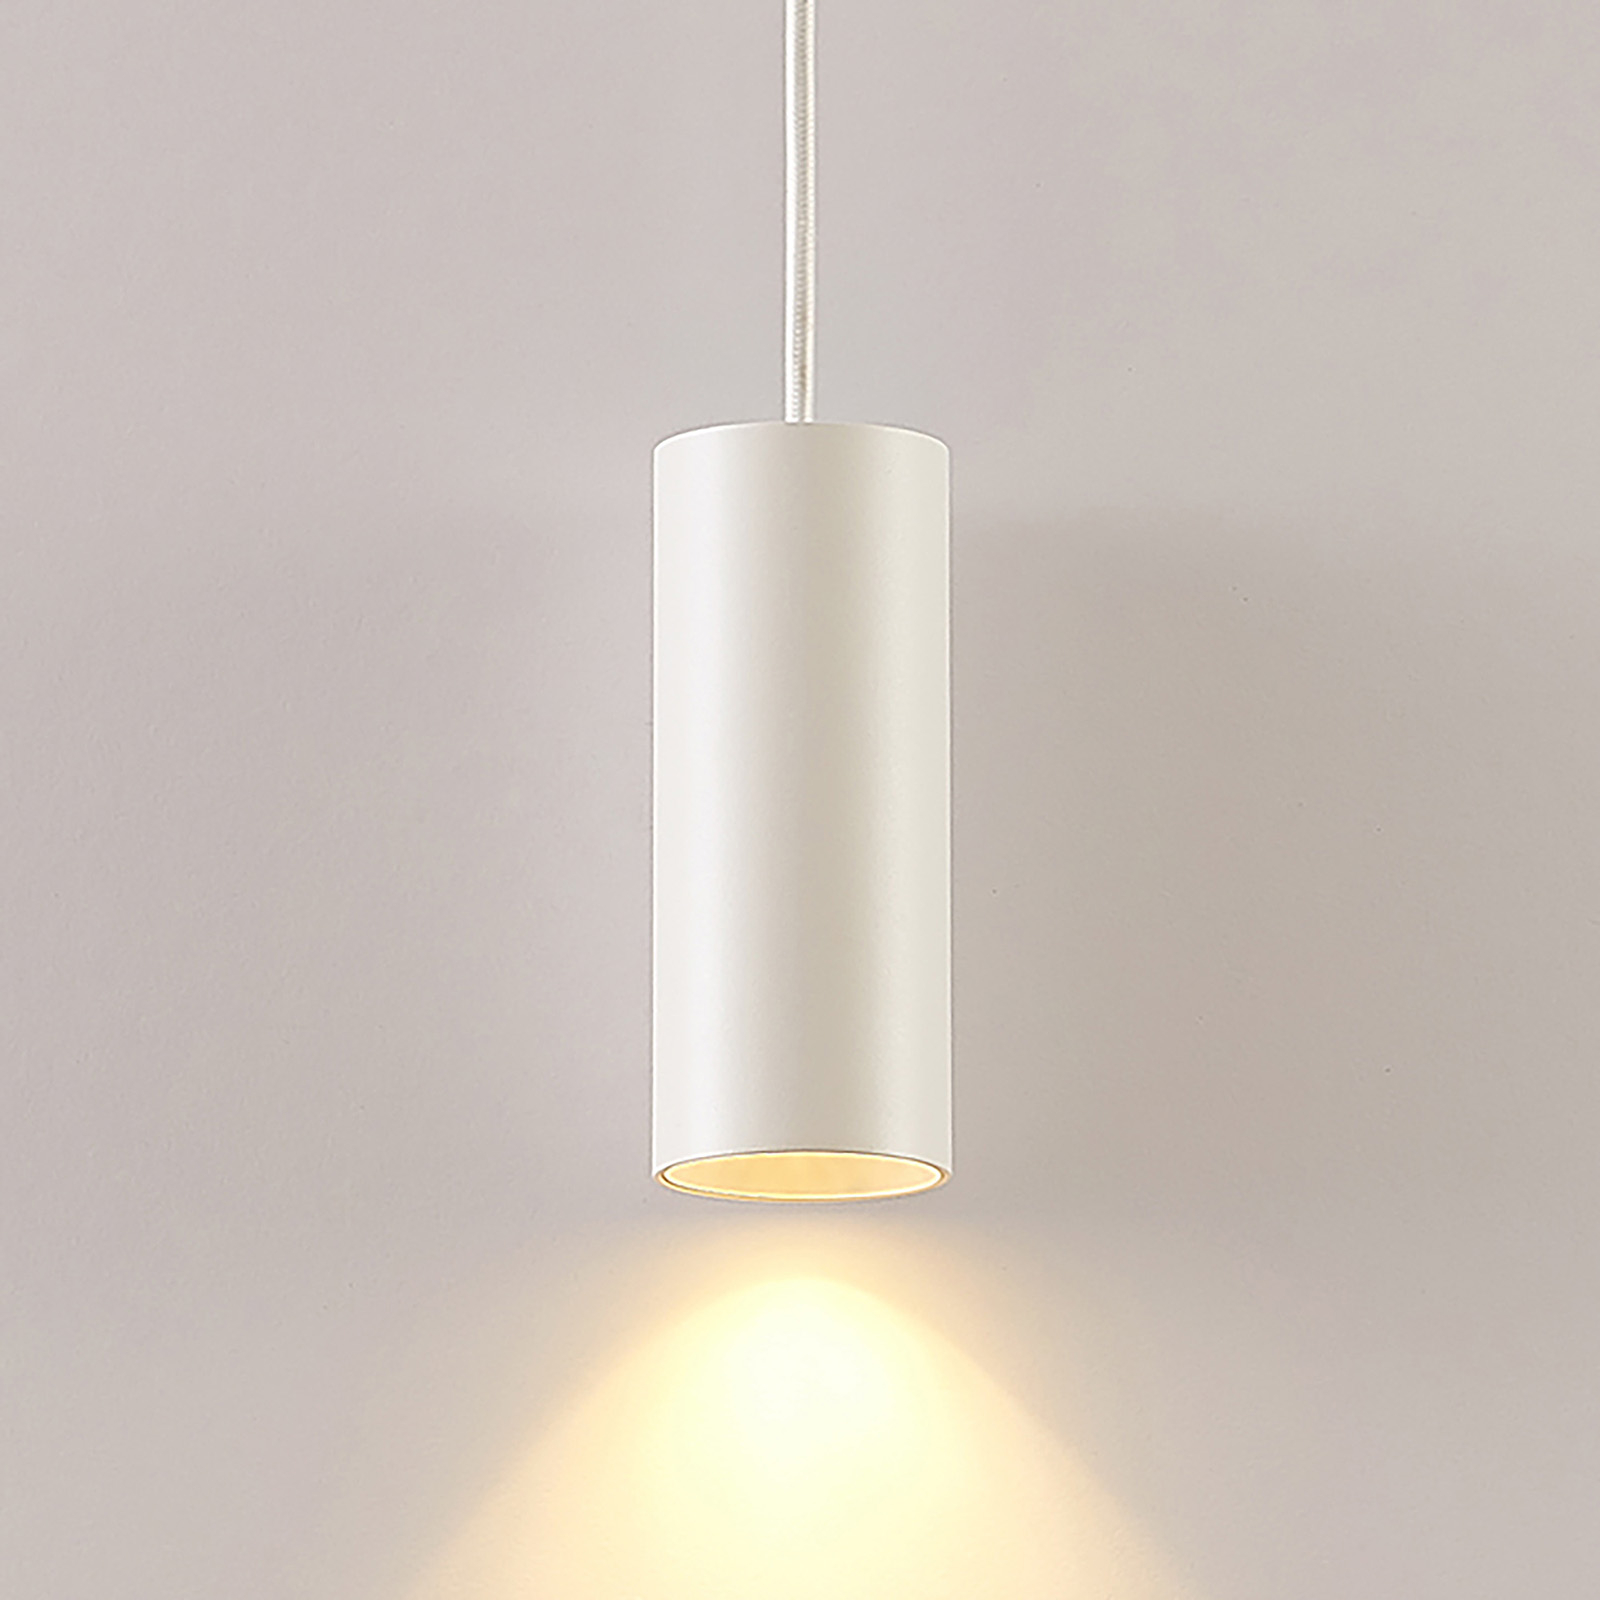 Arcchio Ejona függő lámpa, 15 cm magas, fehér